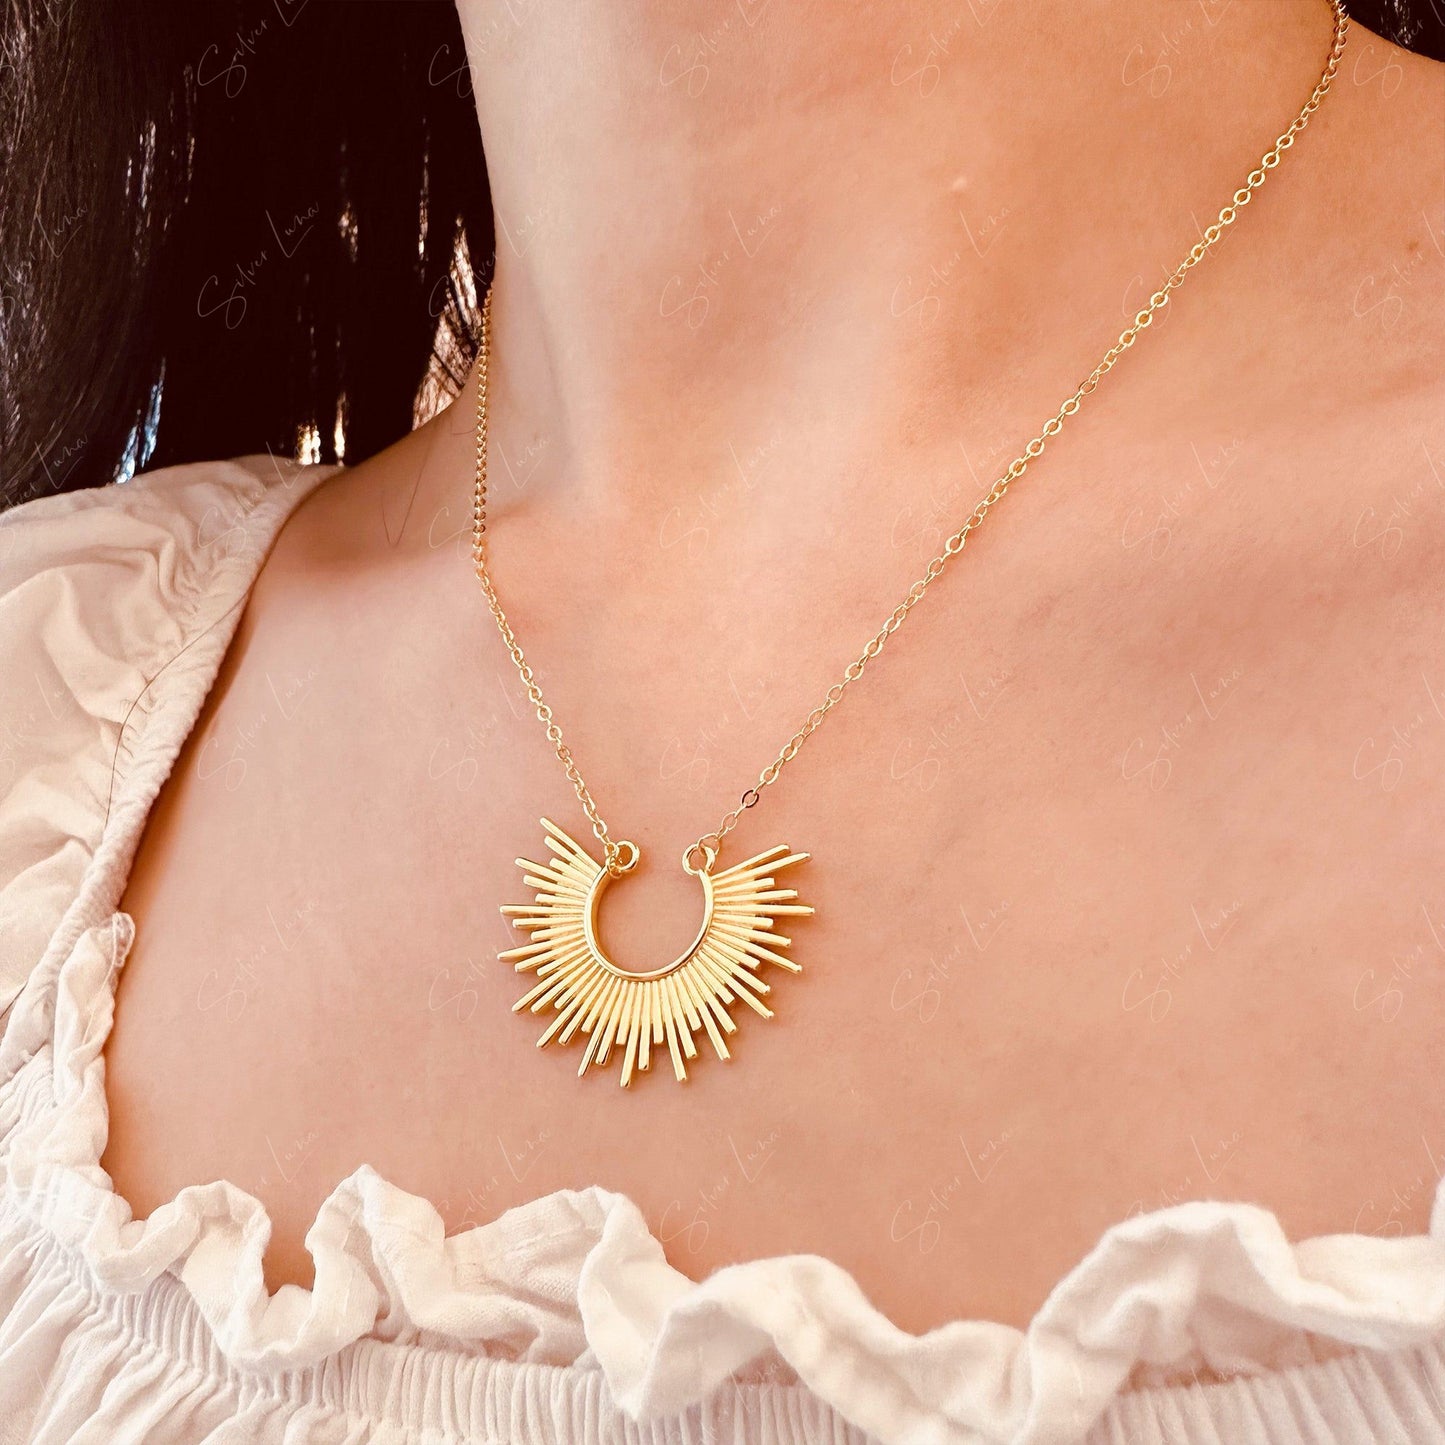 Sun ray pendant necklace